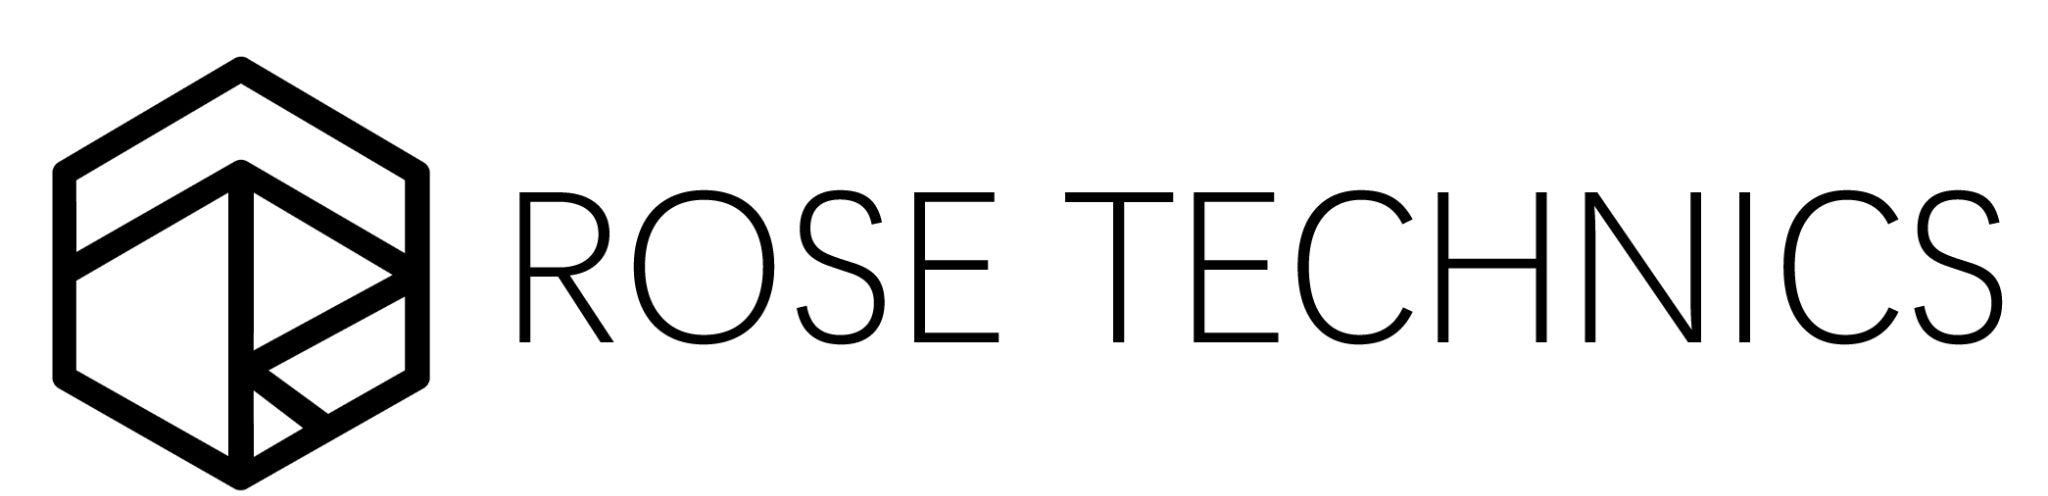 Rose Technics logo black